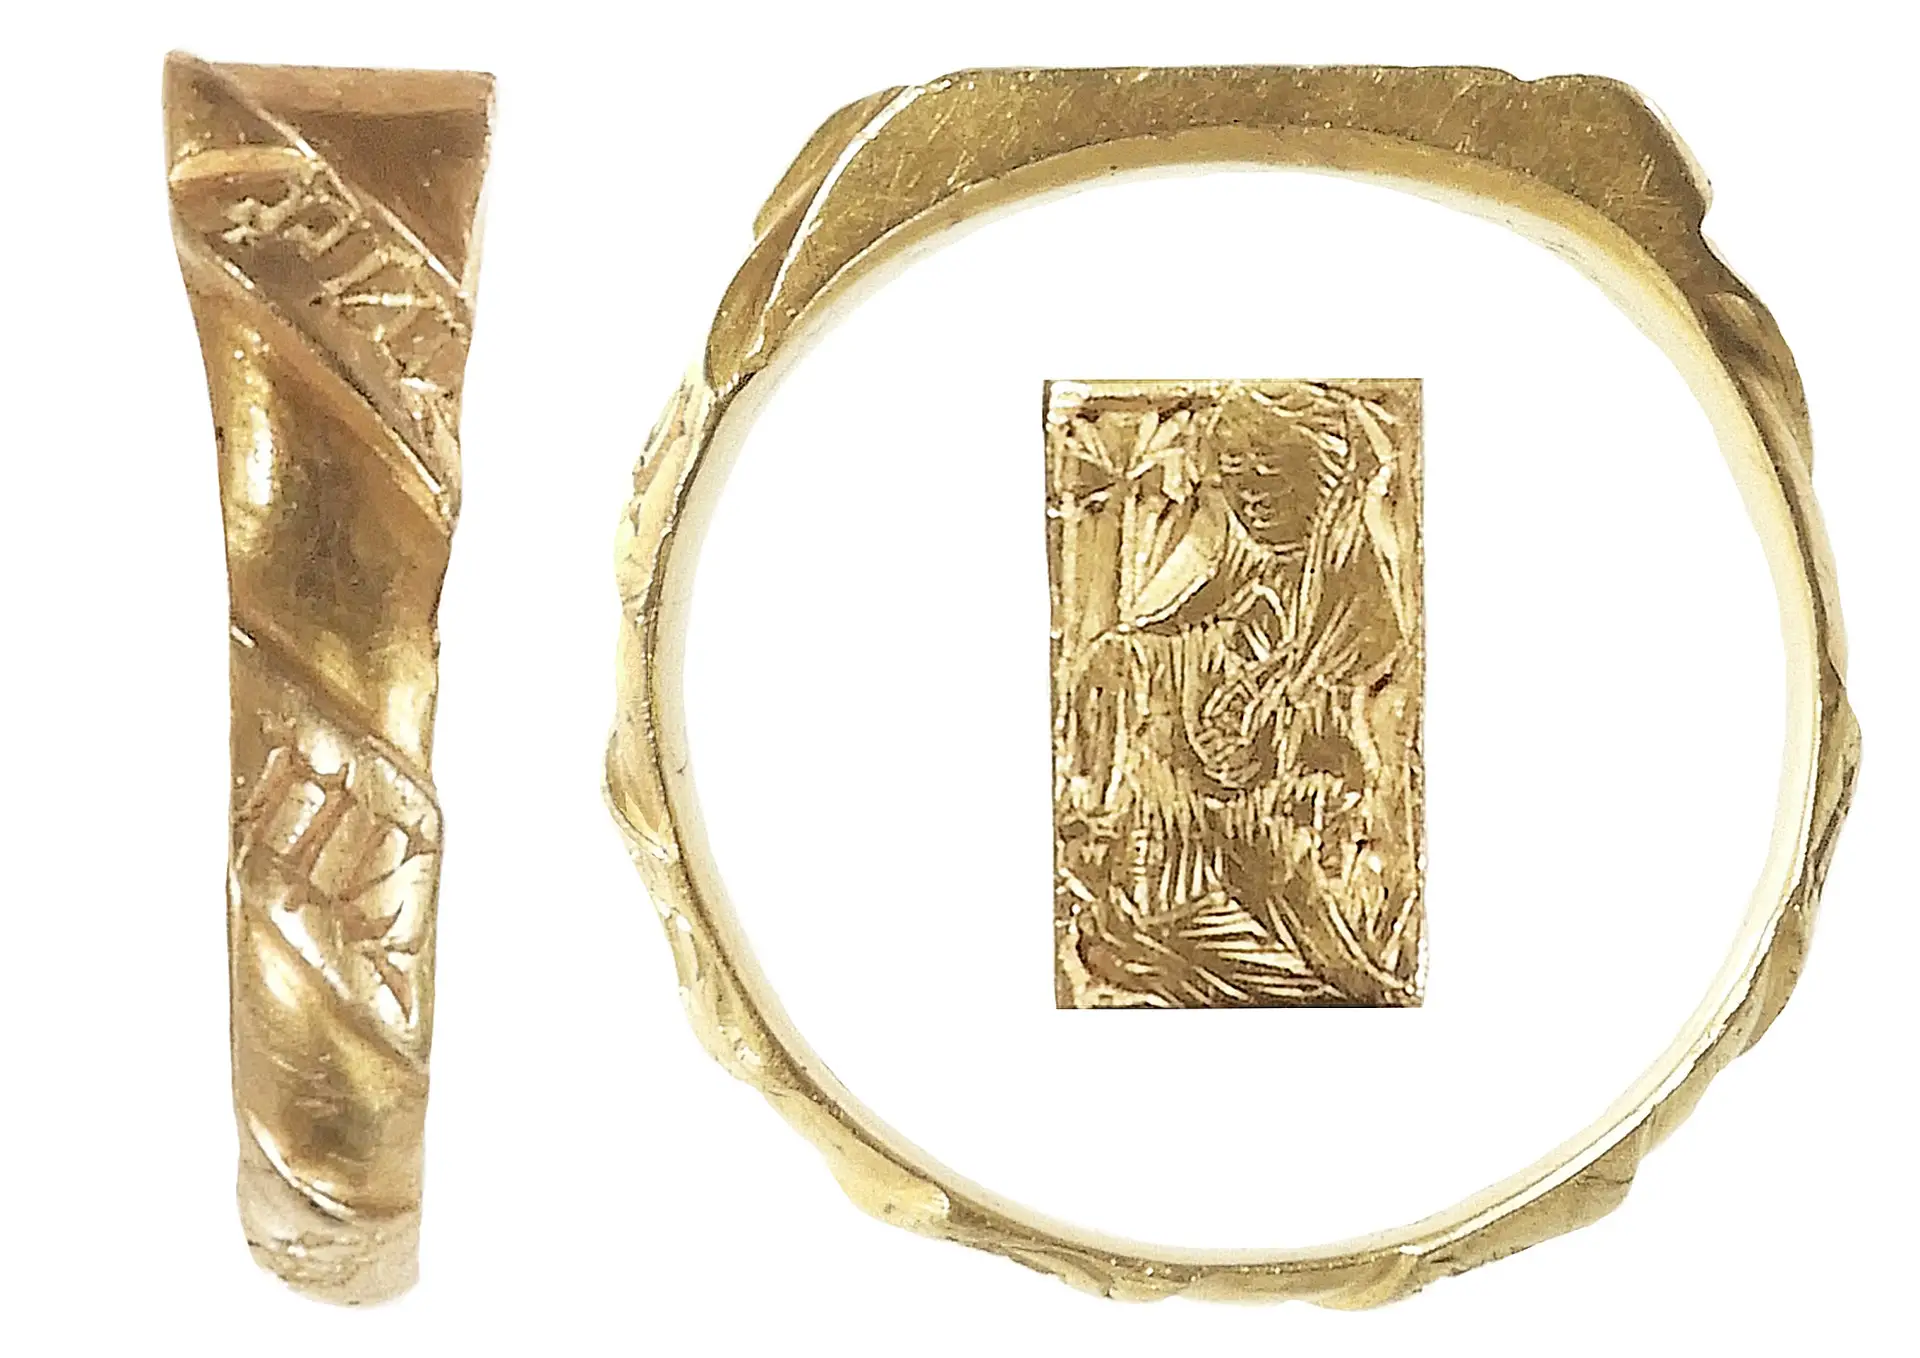 15th century gold ring